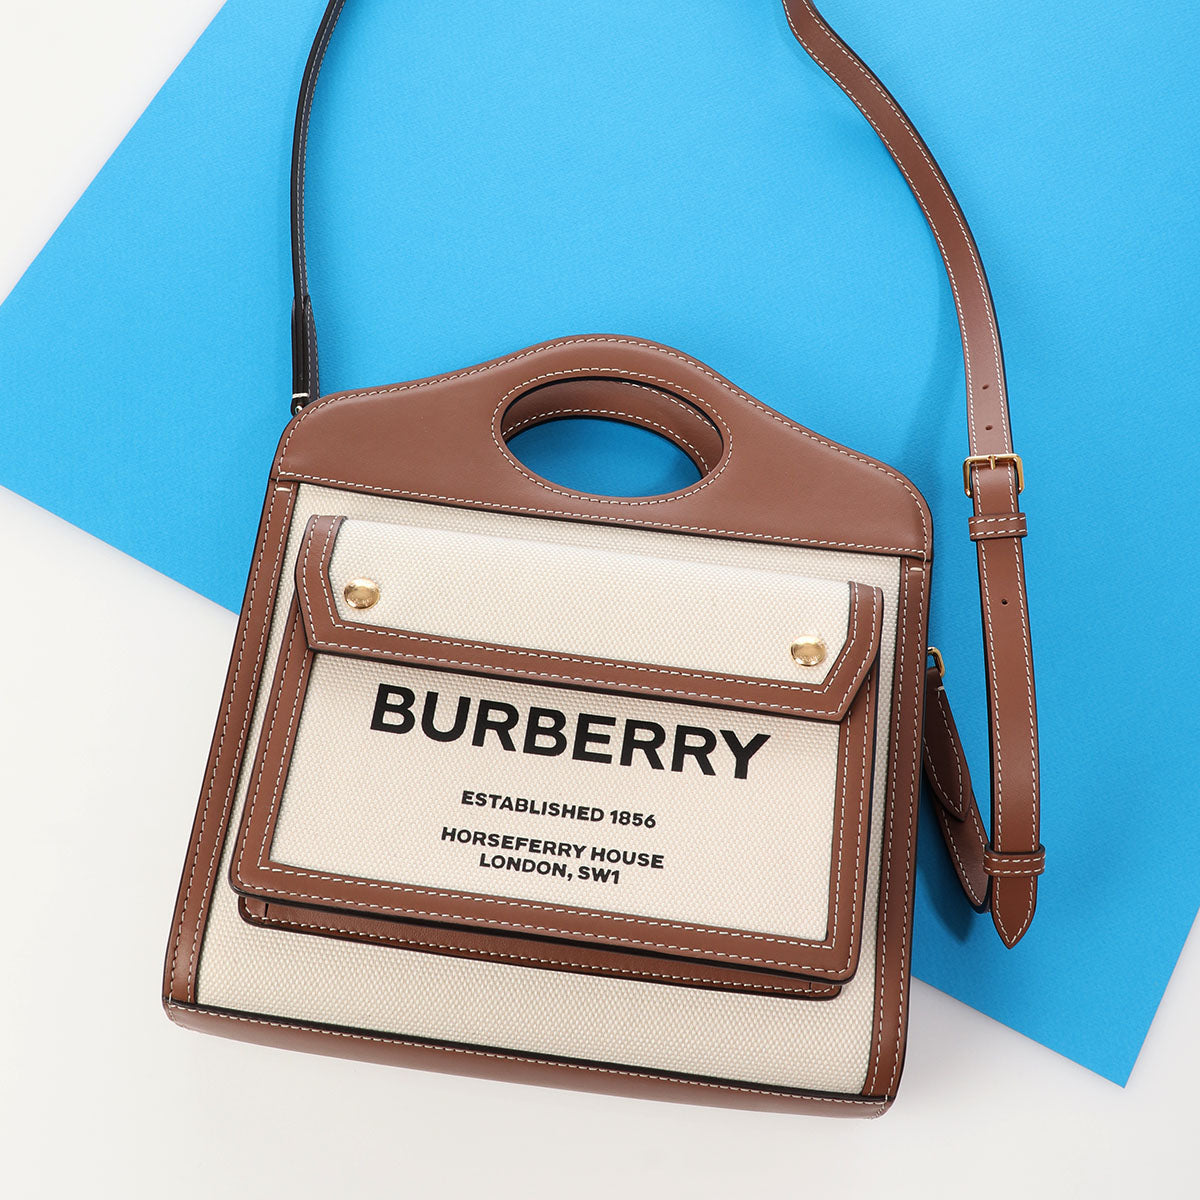 Burberry London Tote Bag (Neverfull)